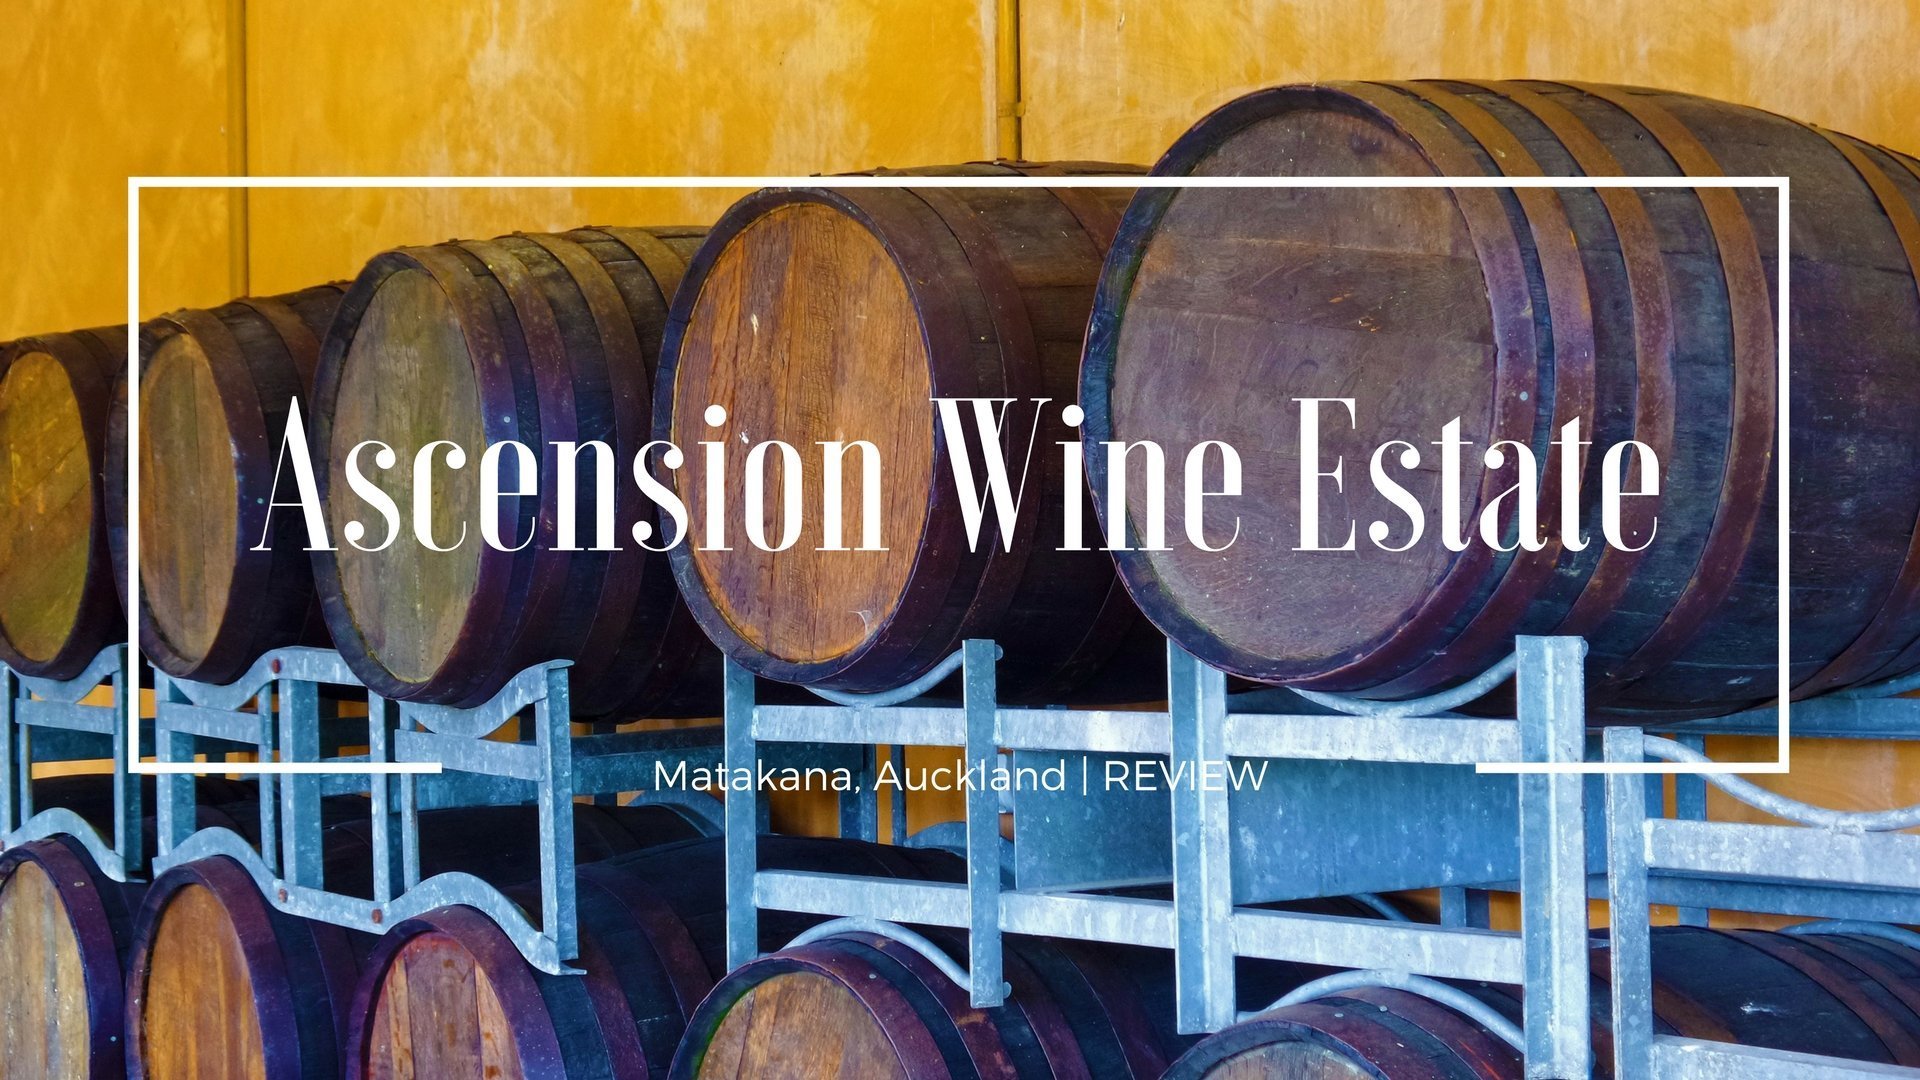 Ascension Wine Estate, Matakana, Auckland Review